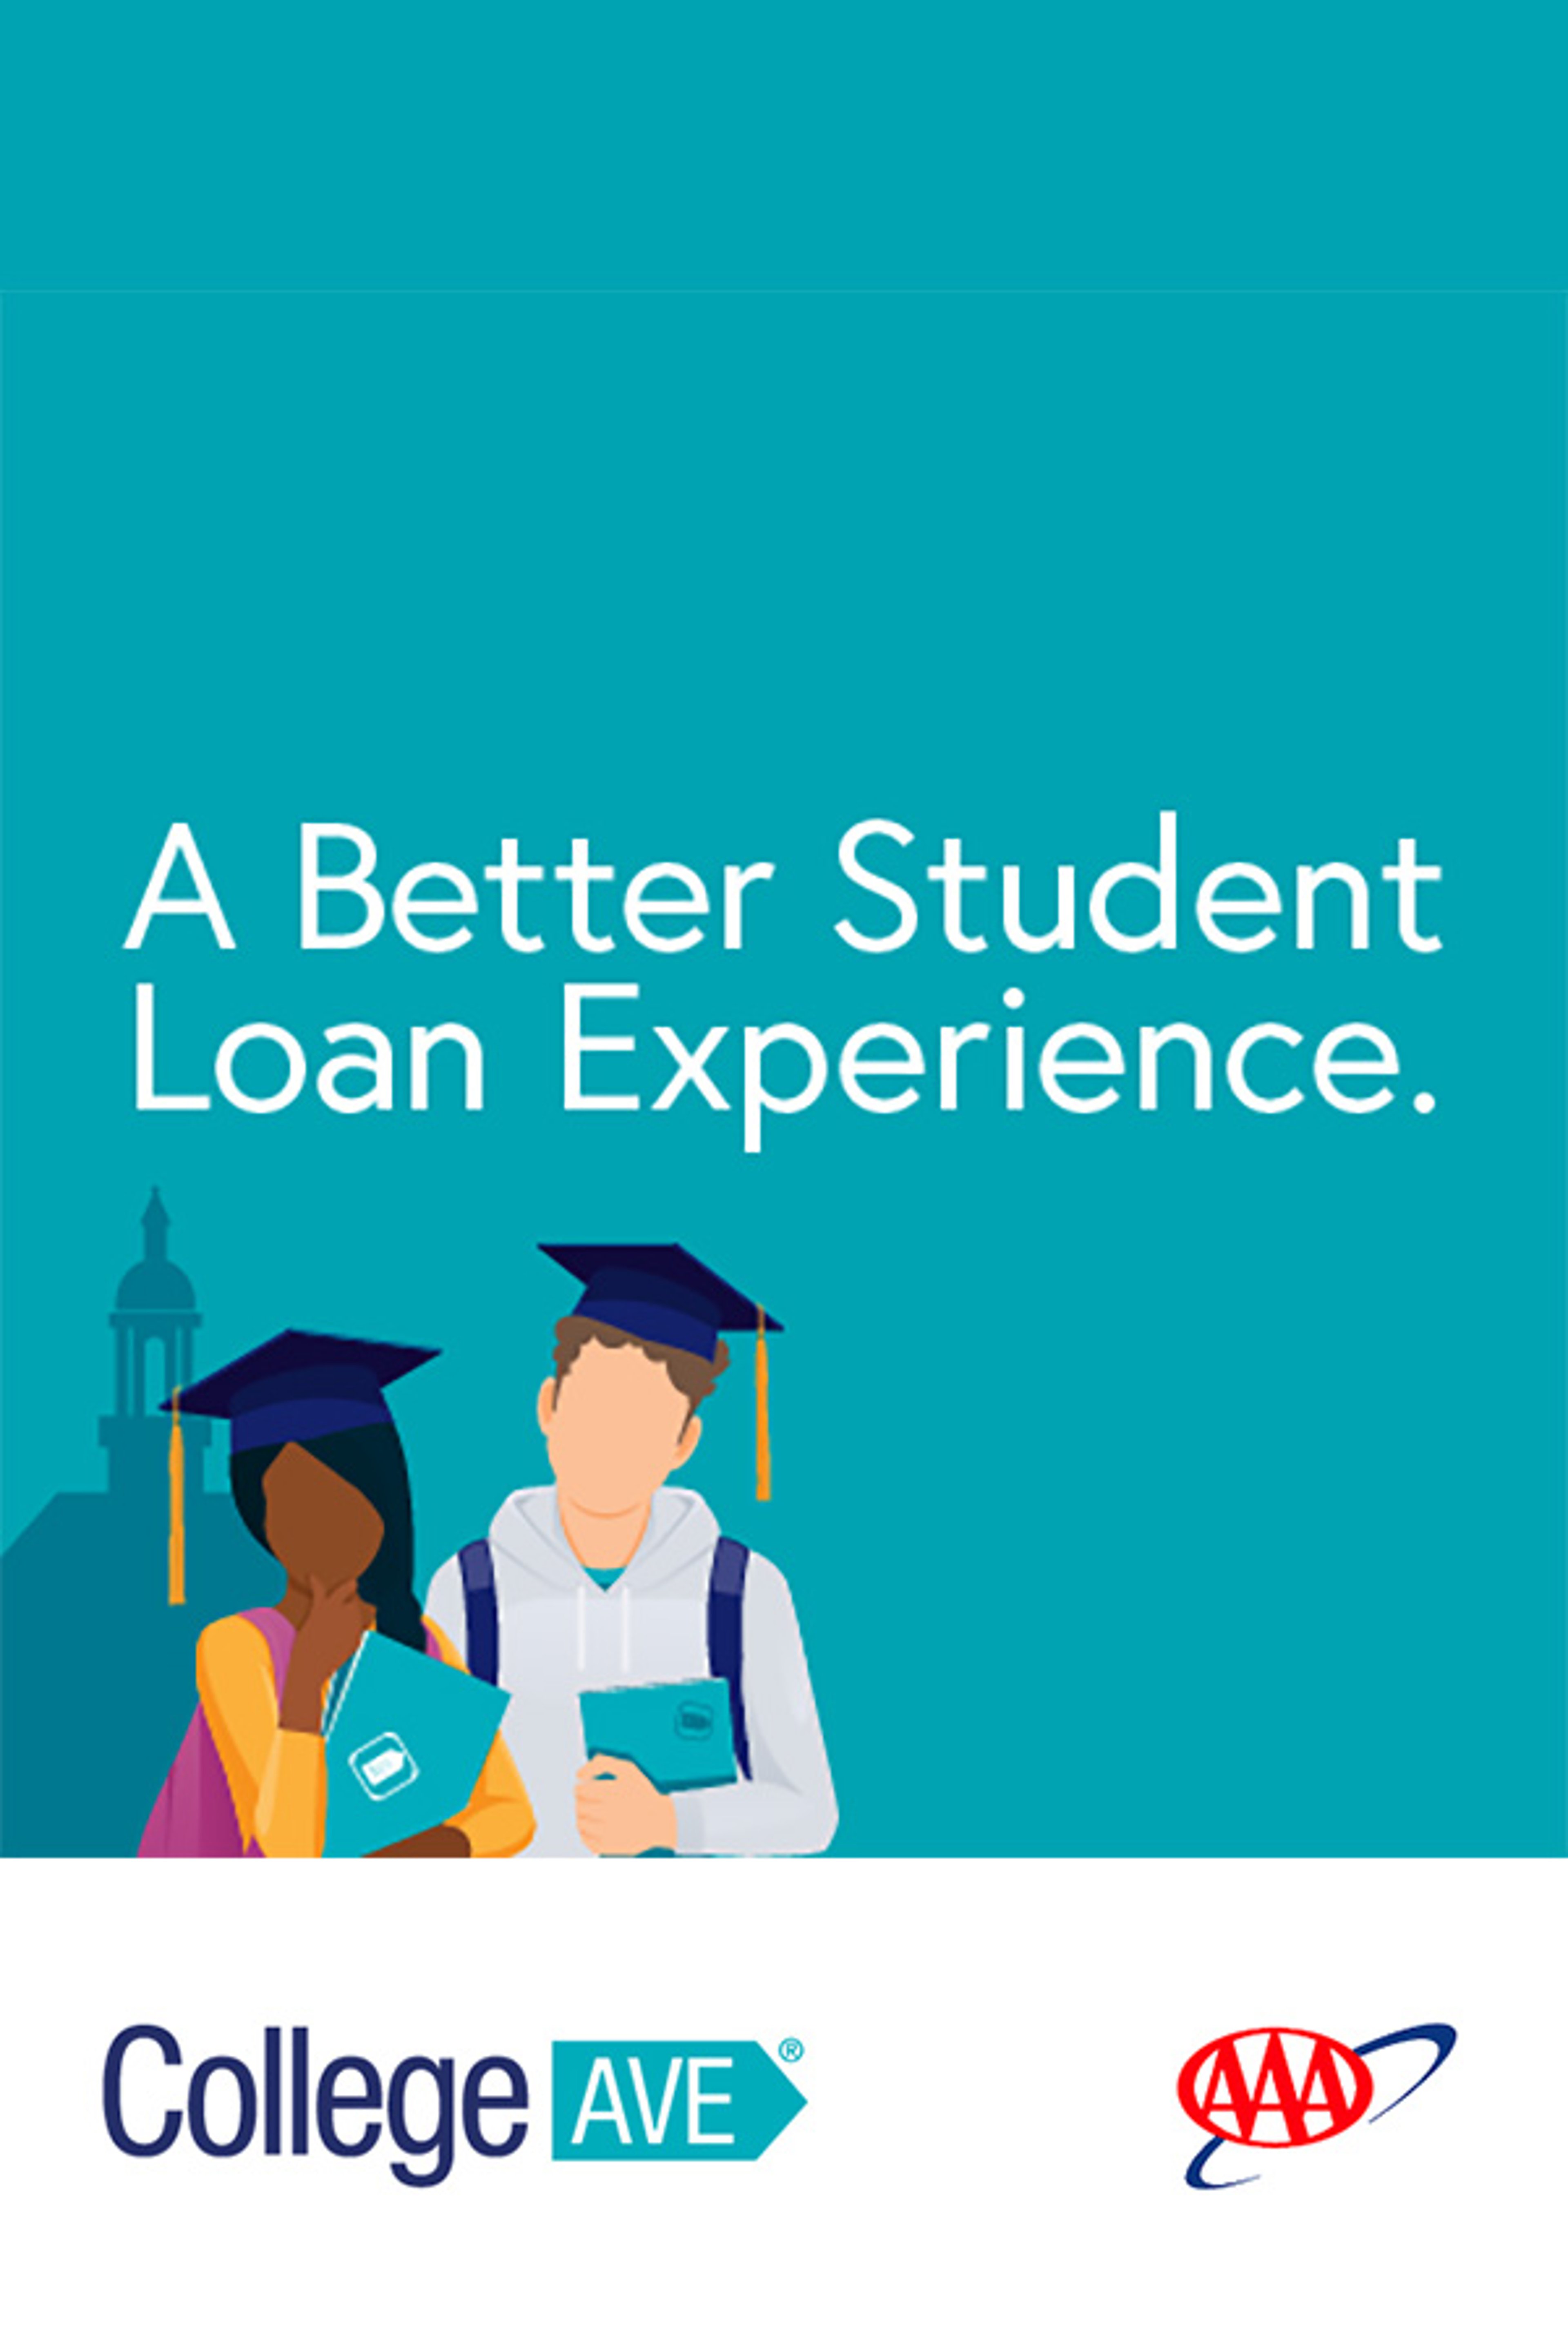 Student loans member benefits